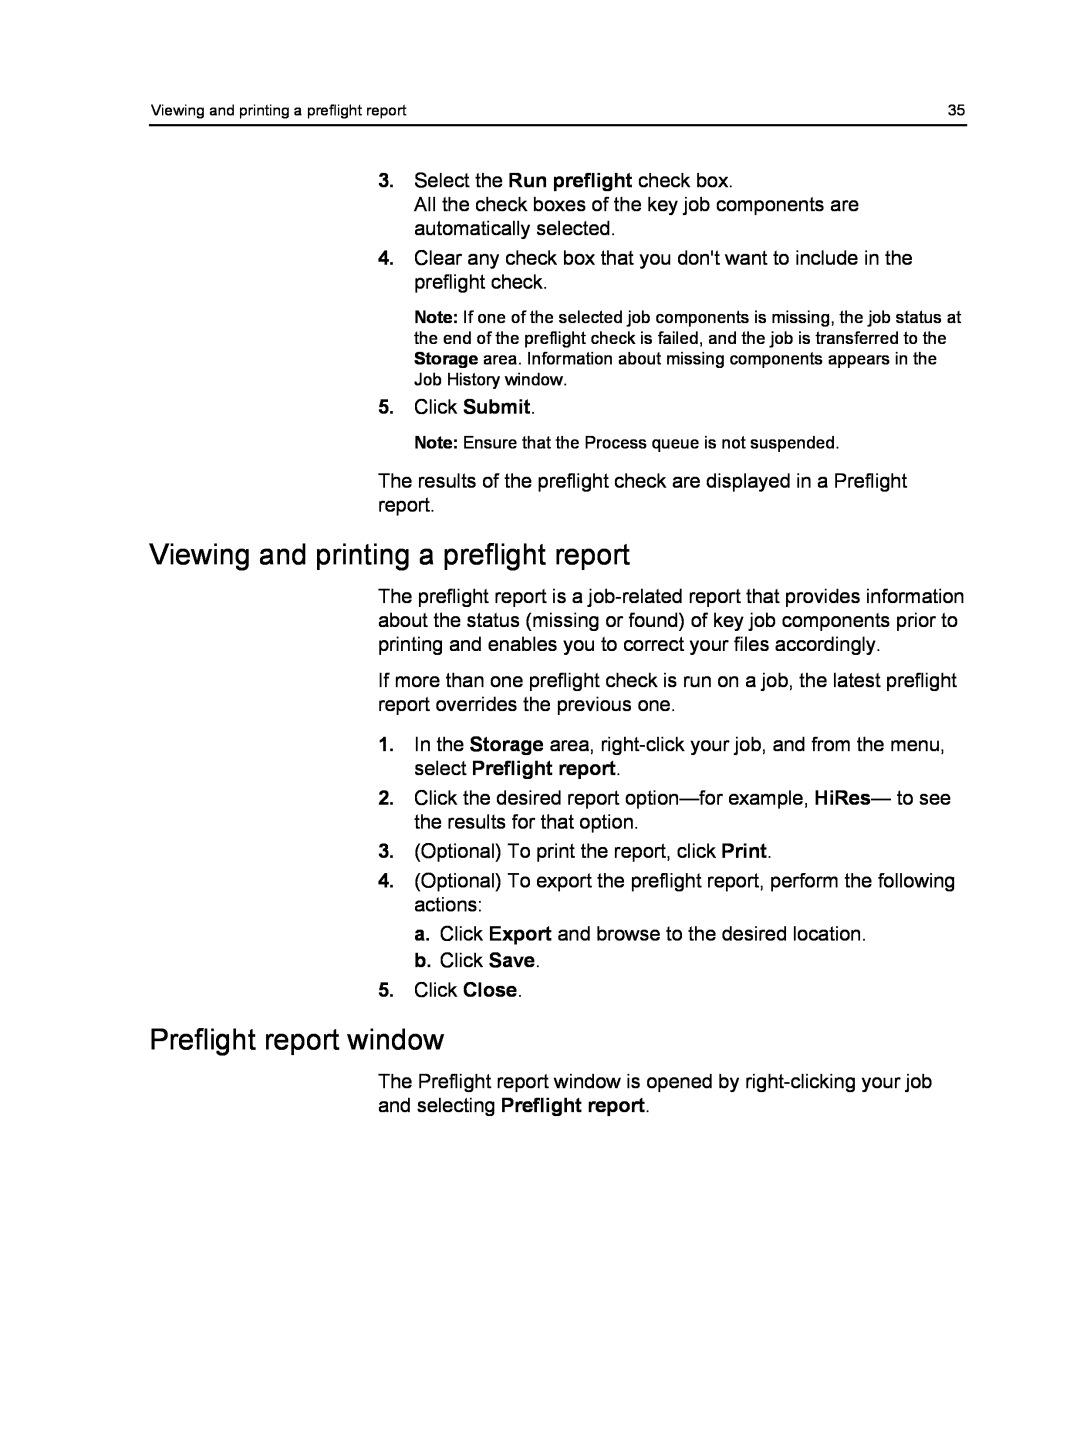 Xerox 550, 560 manual Viewing and printing a preflight report, Preflight report window 